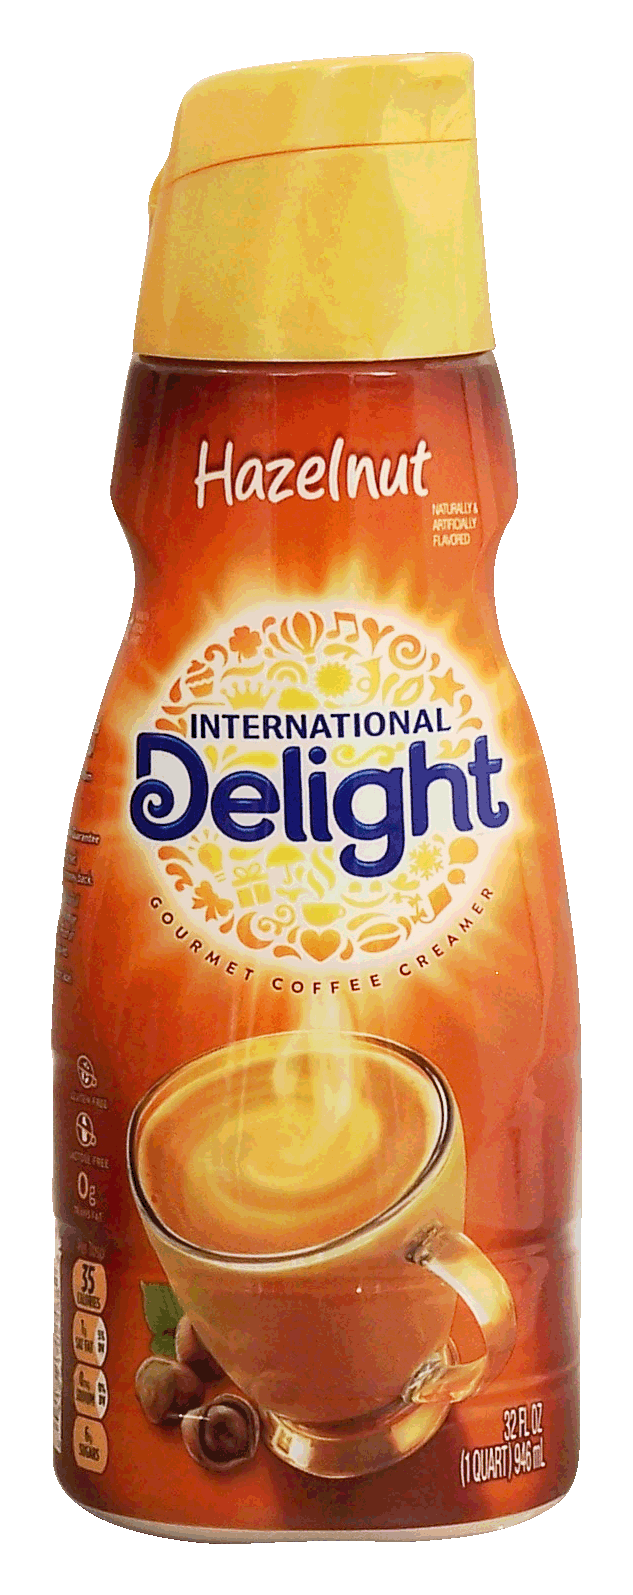 International Delight  hazelnut flavored gourmet coffee creamer Full-Size Picture